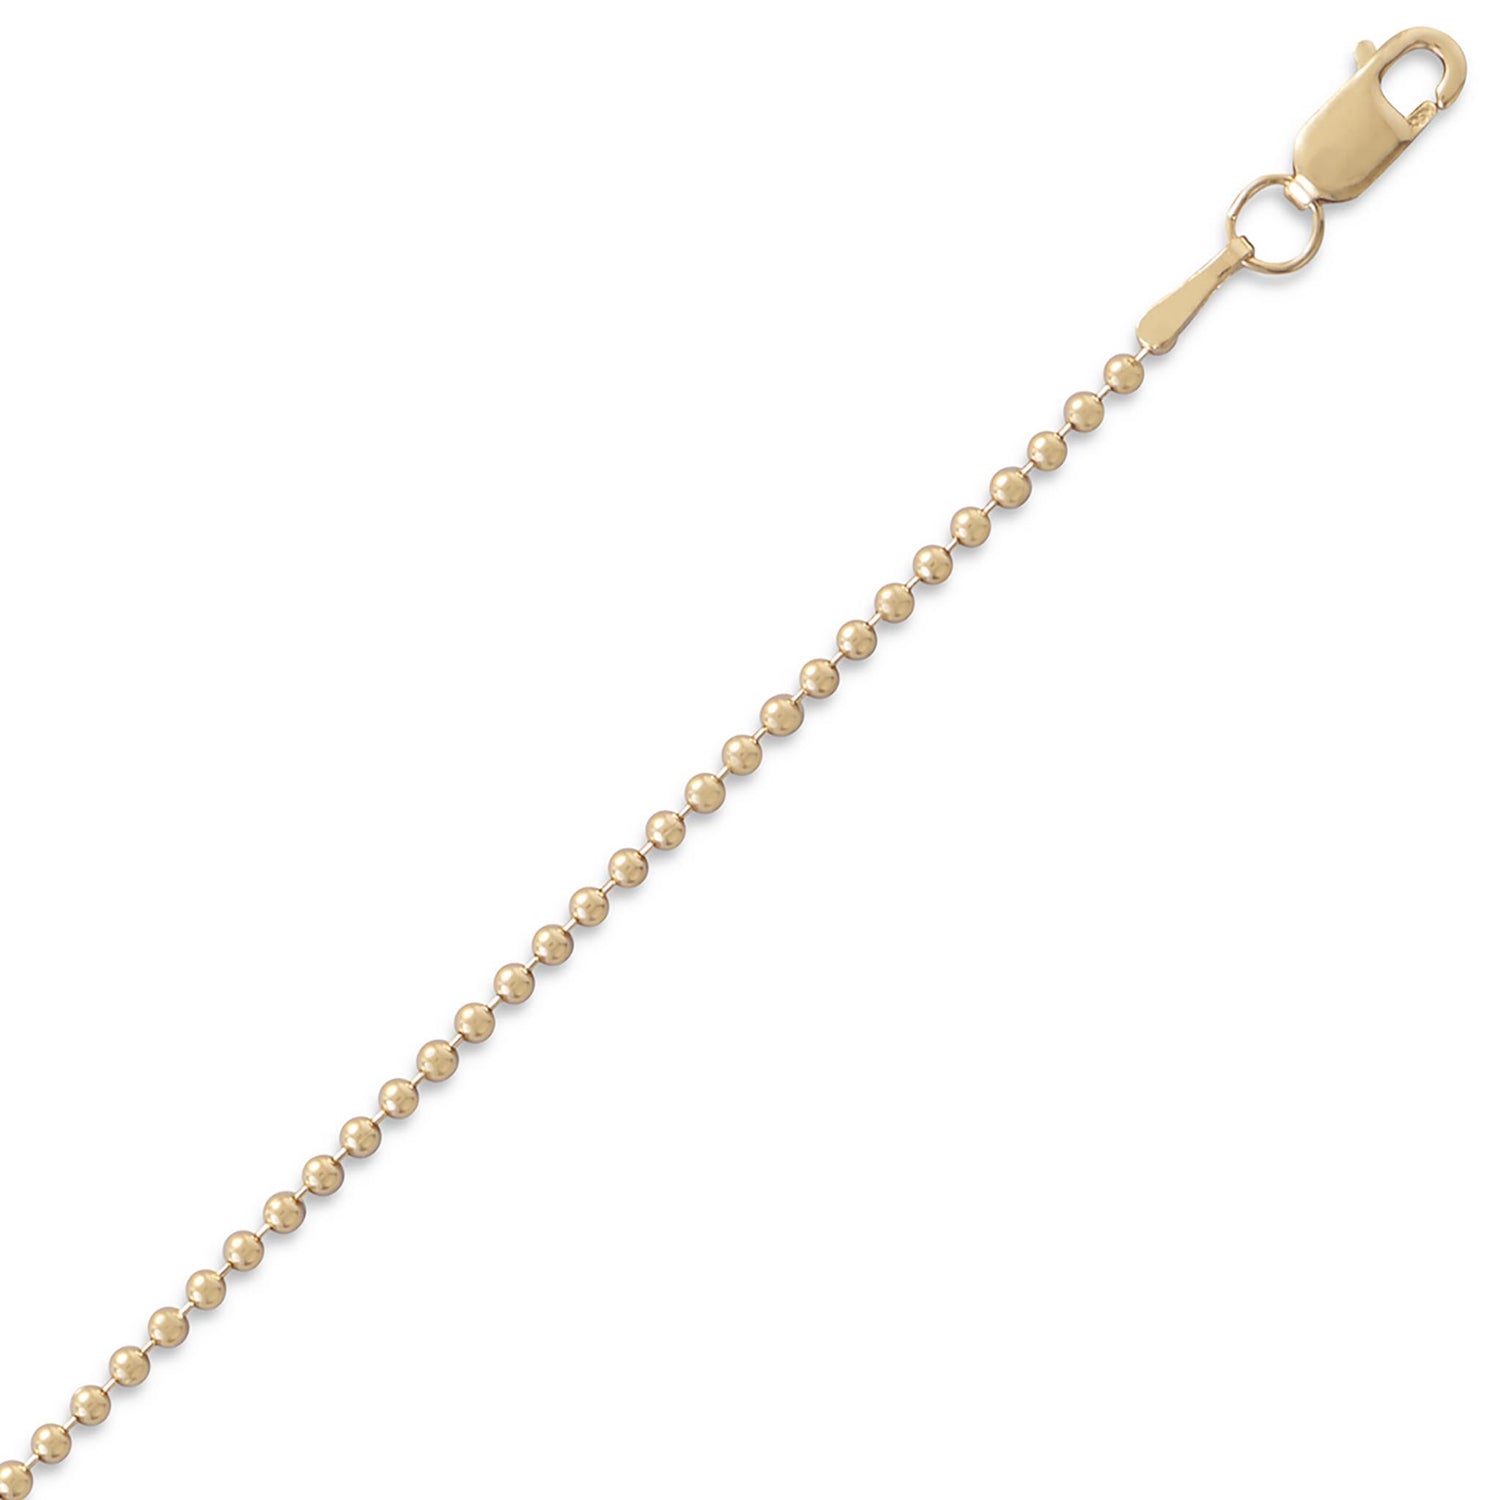 Bead Chain - 1.5mm